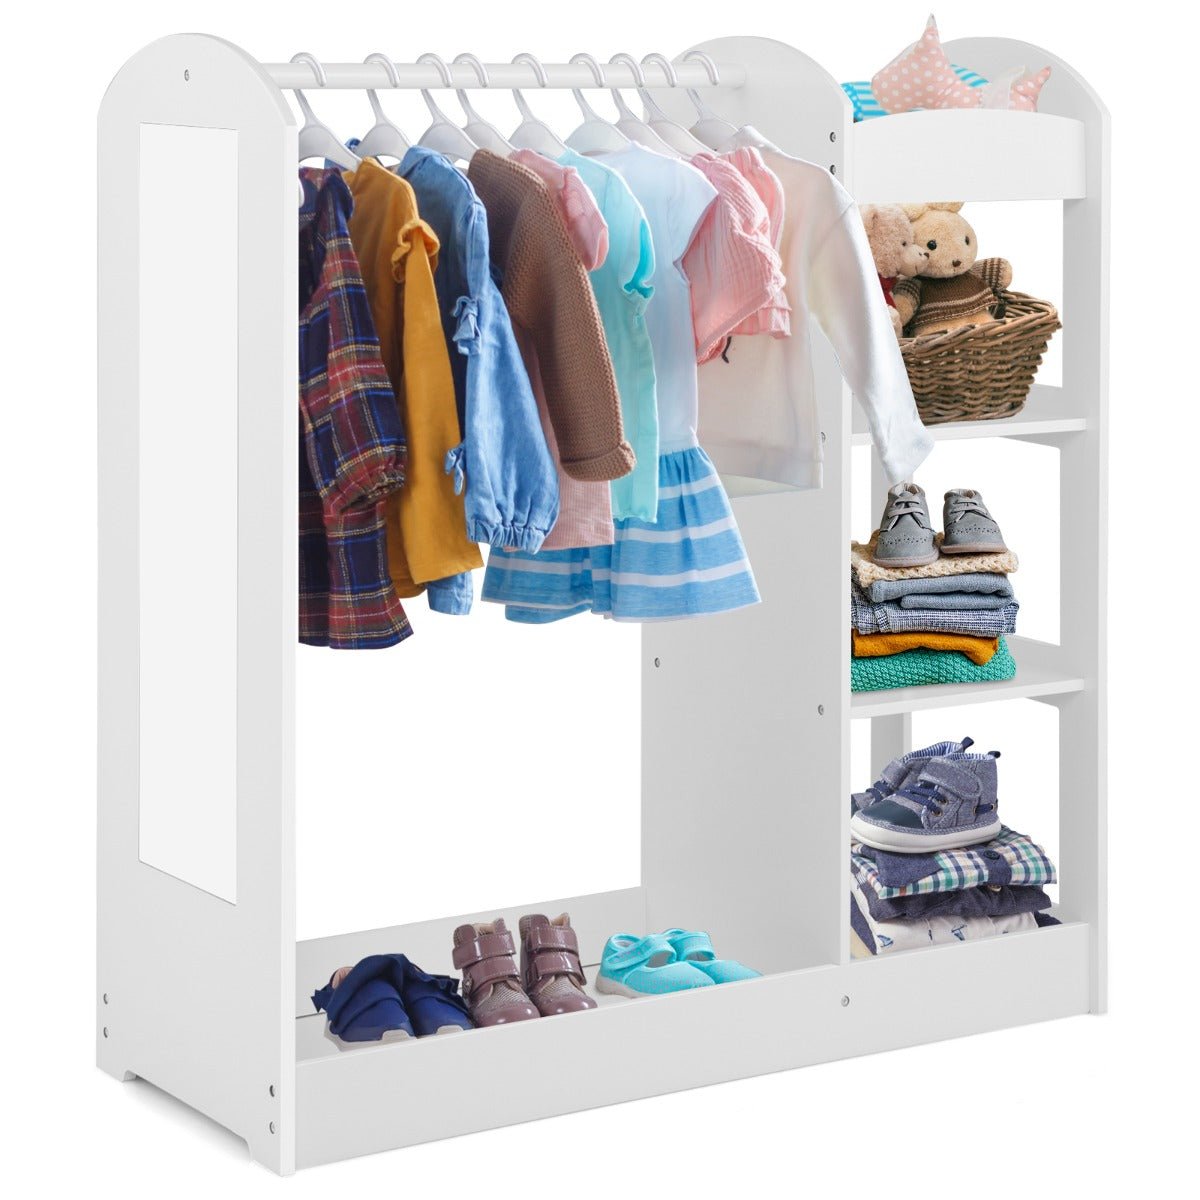 Shop White Kids Dress Up Storage Cupboard - Organize Playtime Fun